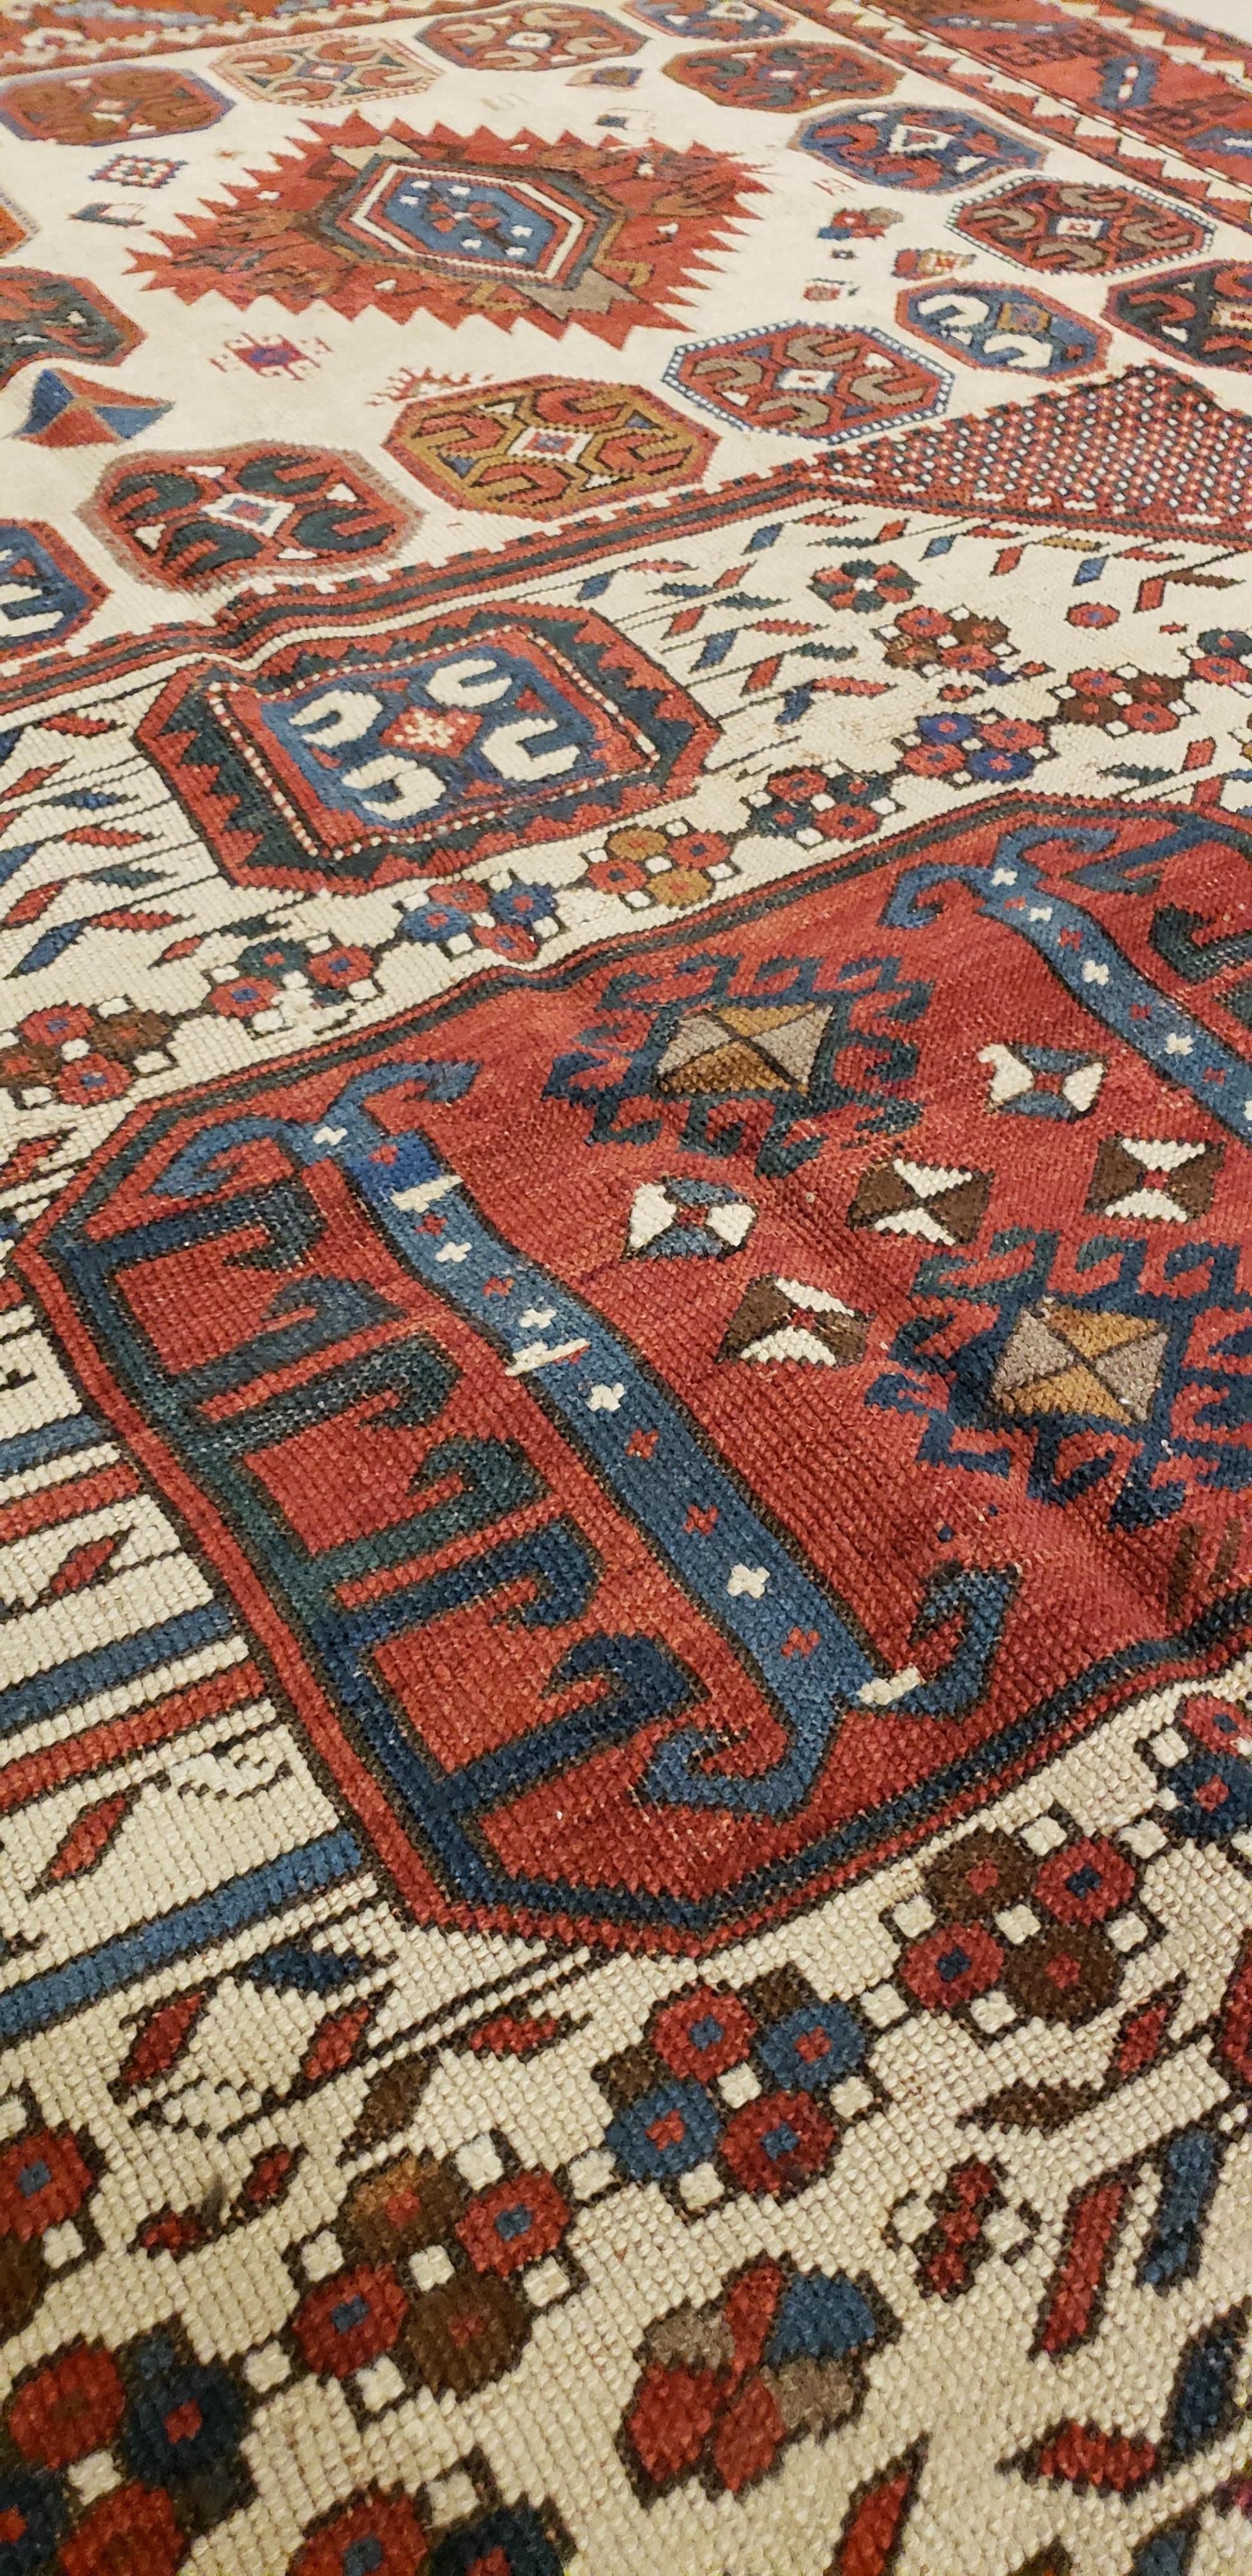 19th Century Antique Karachov Kazak Carpet, Handmade Wool, Rust, Ivory, Blue and Geometric For Sale